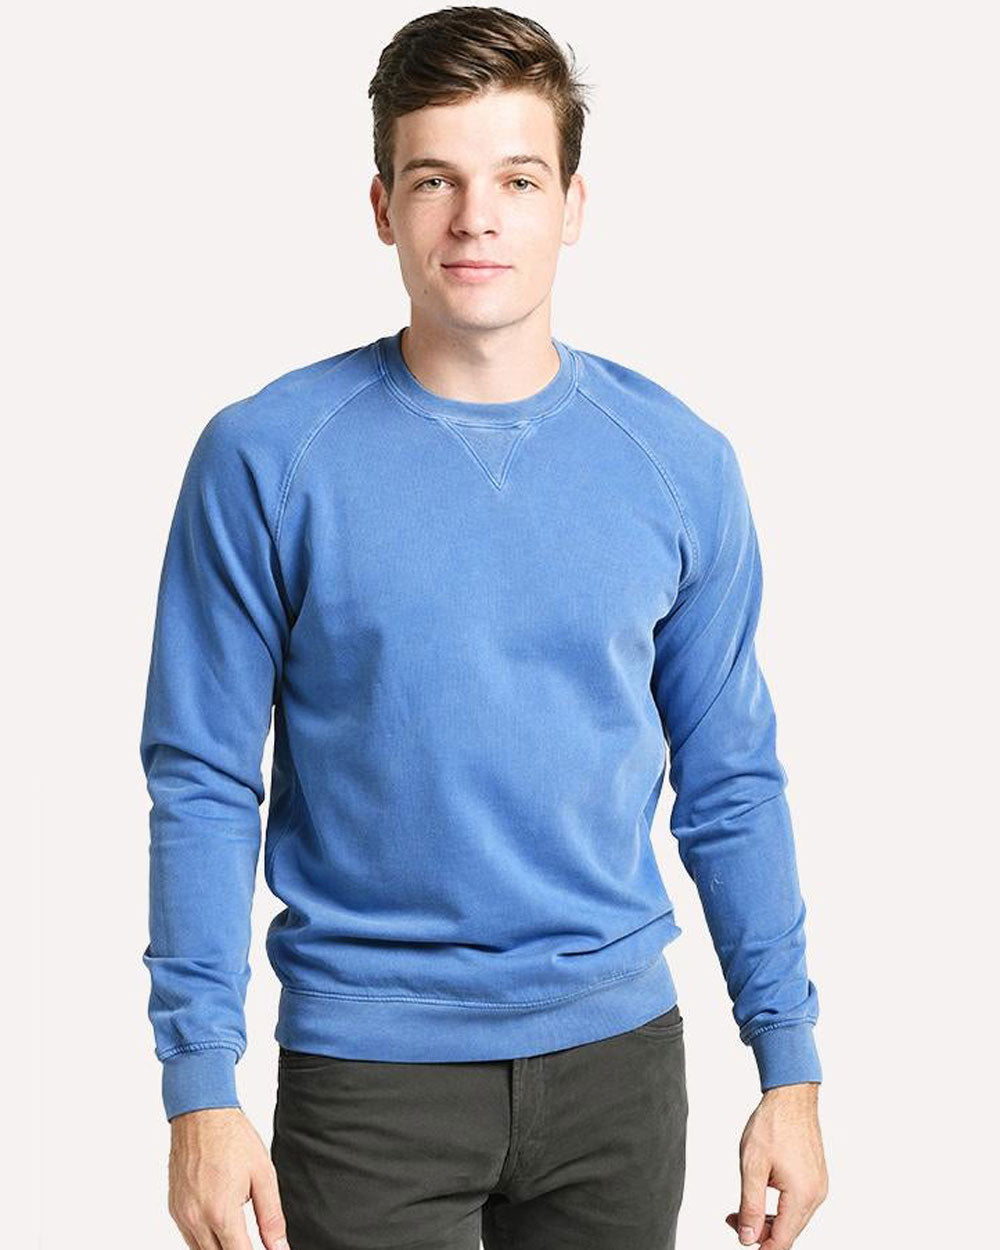 Raglan Crewneck Sweatshirt in Vintage Sky